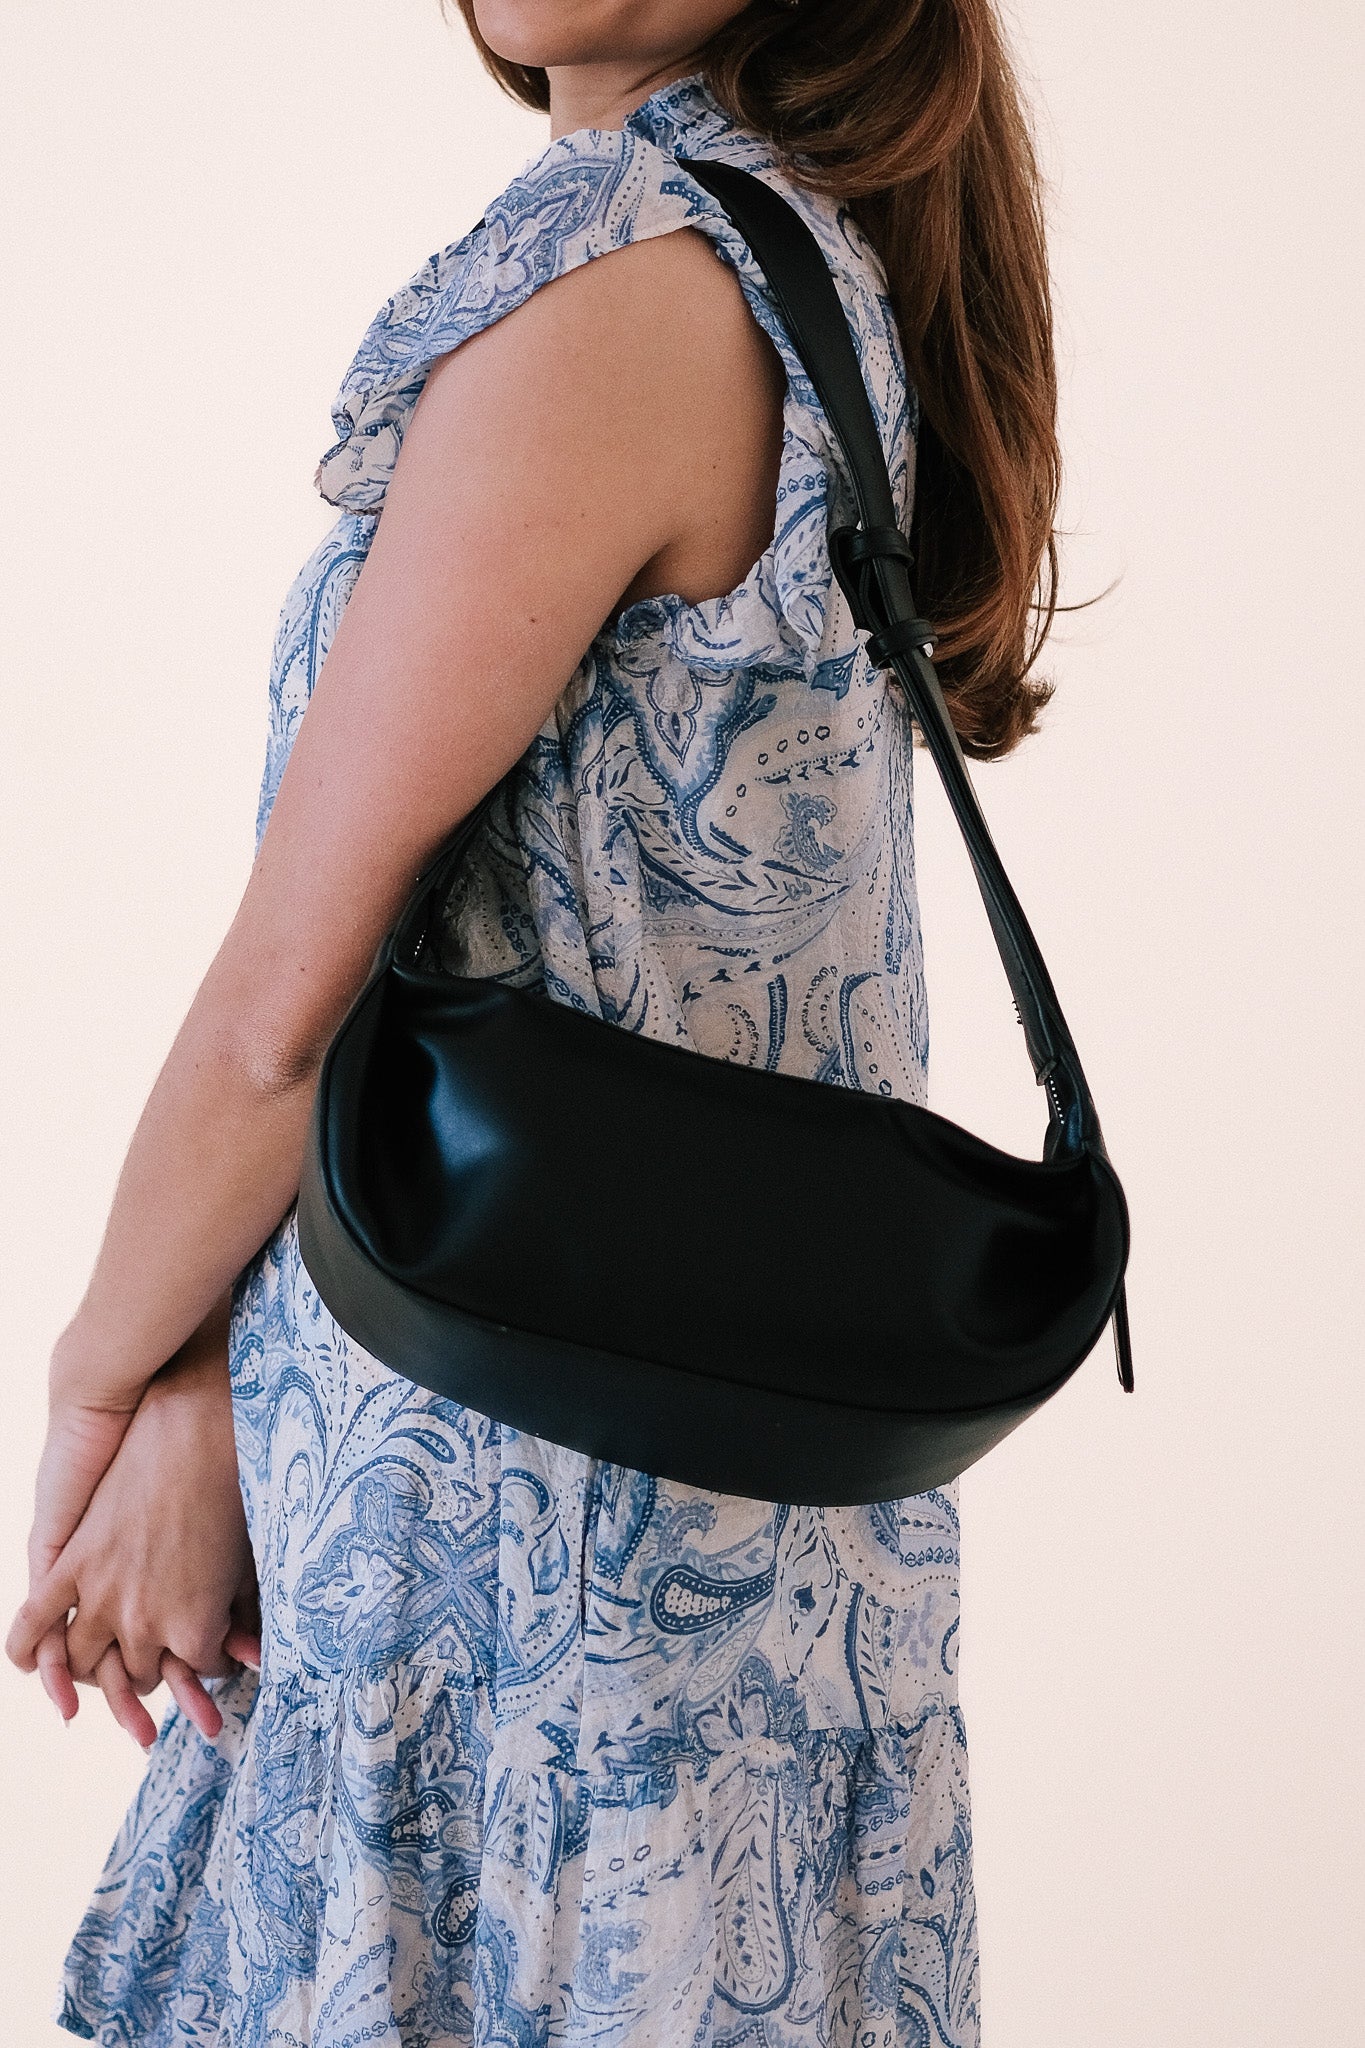 Shop LC Faux Leather Crossbody Bag with Shoulder Adjustable Strap Women  Handbag